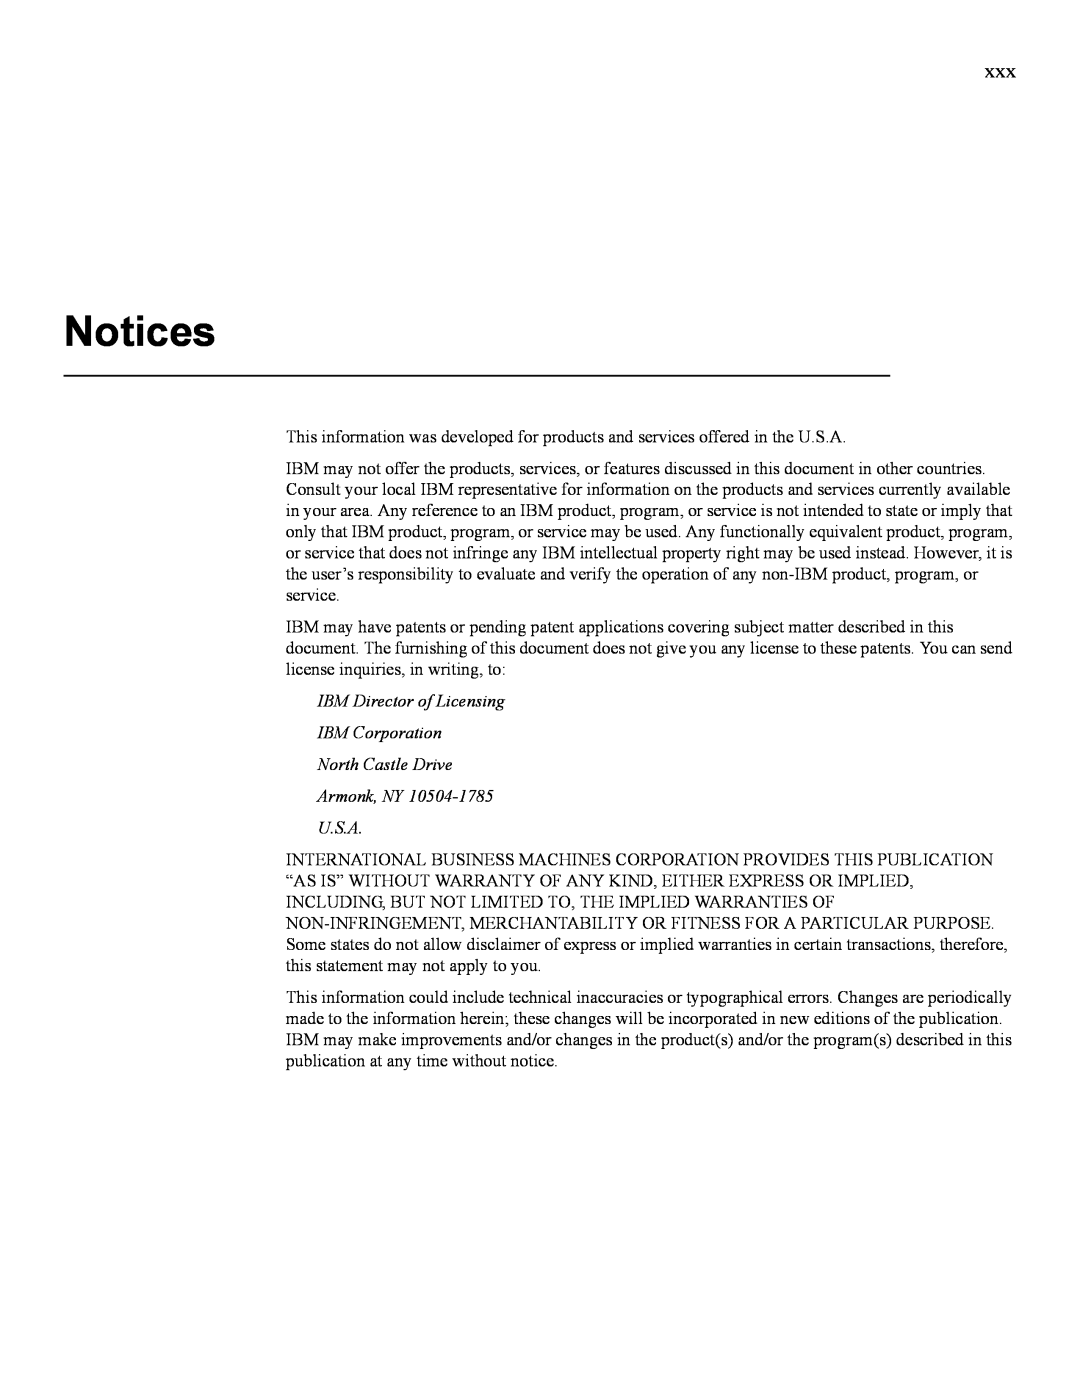 IBM 24R9718 IB manual Notices, IBM Director of Licensing IBM Corporation North Castle Drive, Armonk, NY U.S.A 